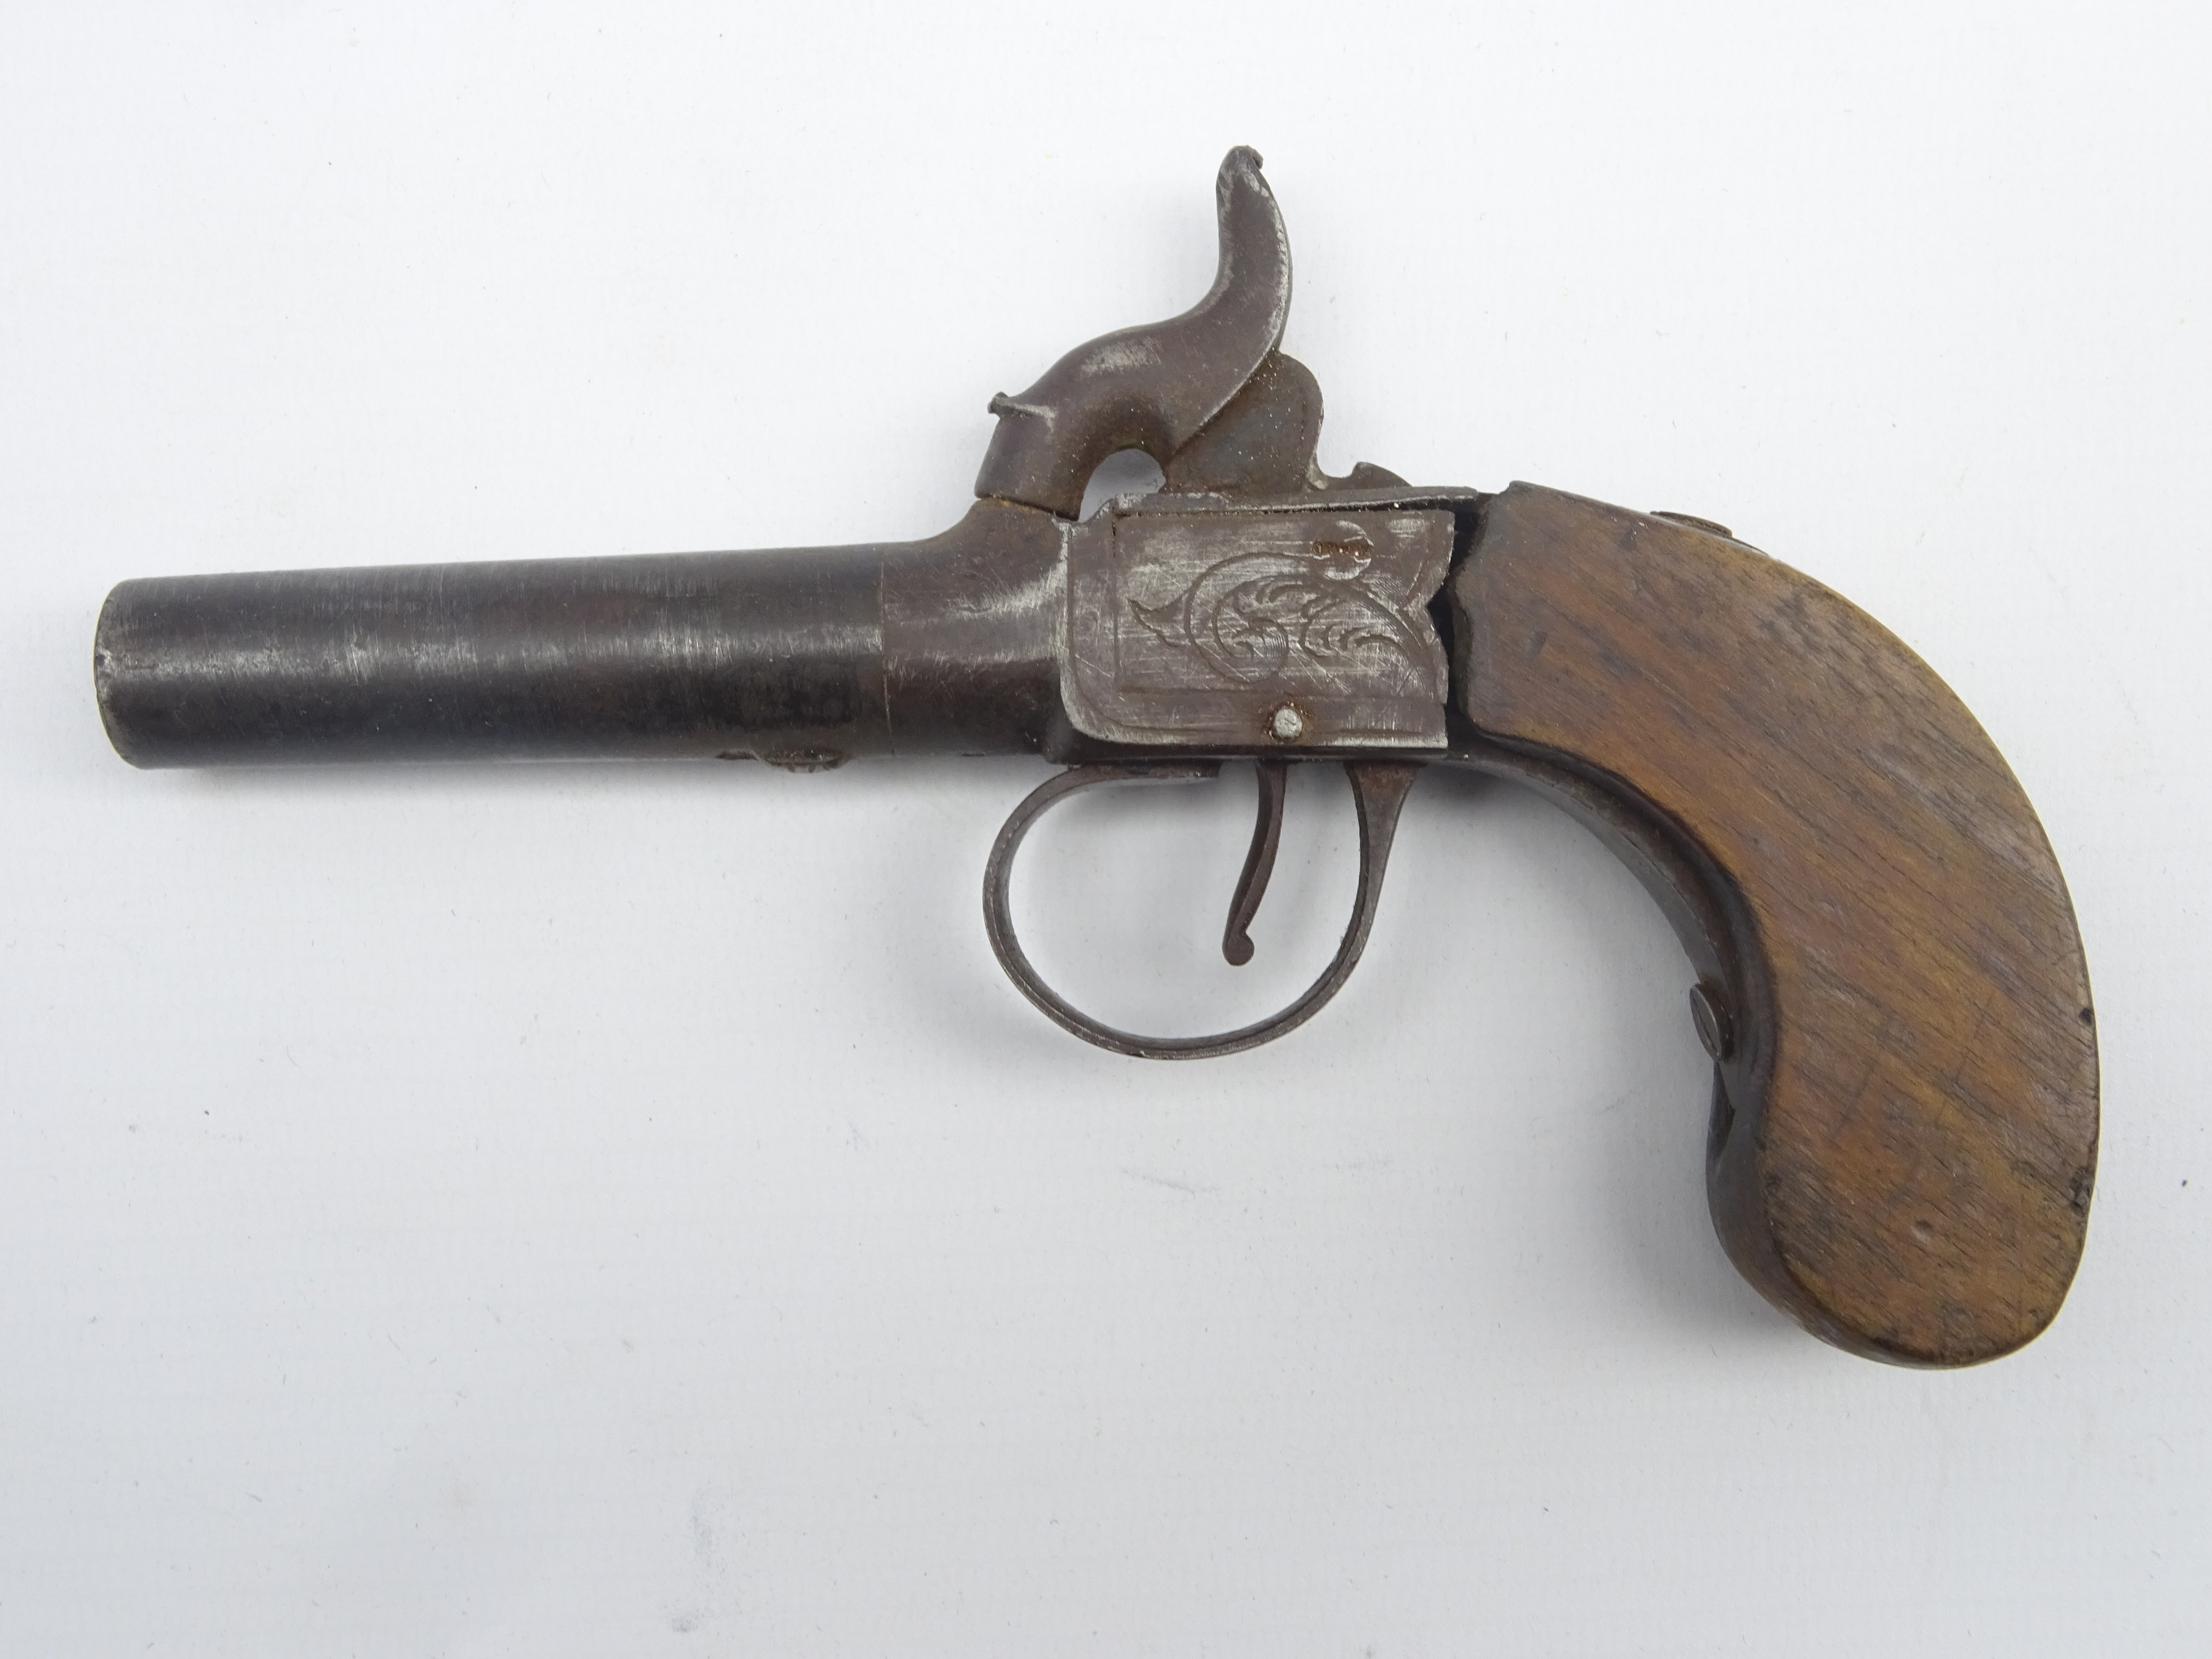 19th century percussion cap pocket pistol with walnut stock,